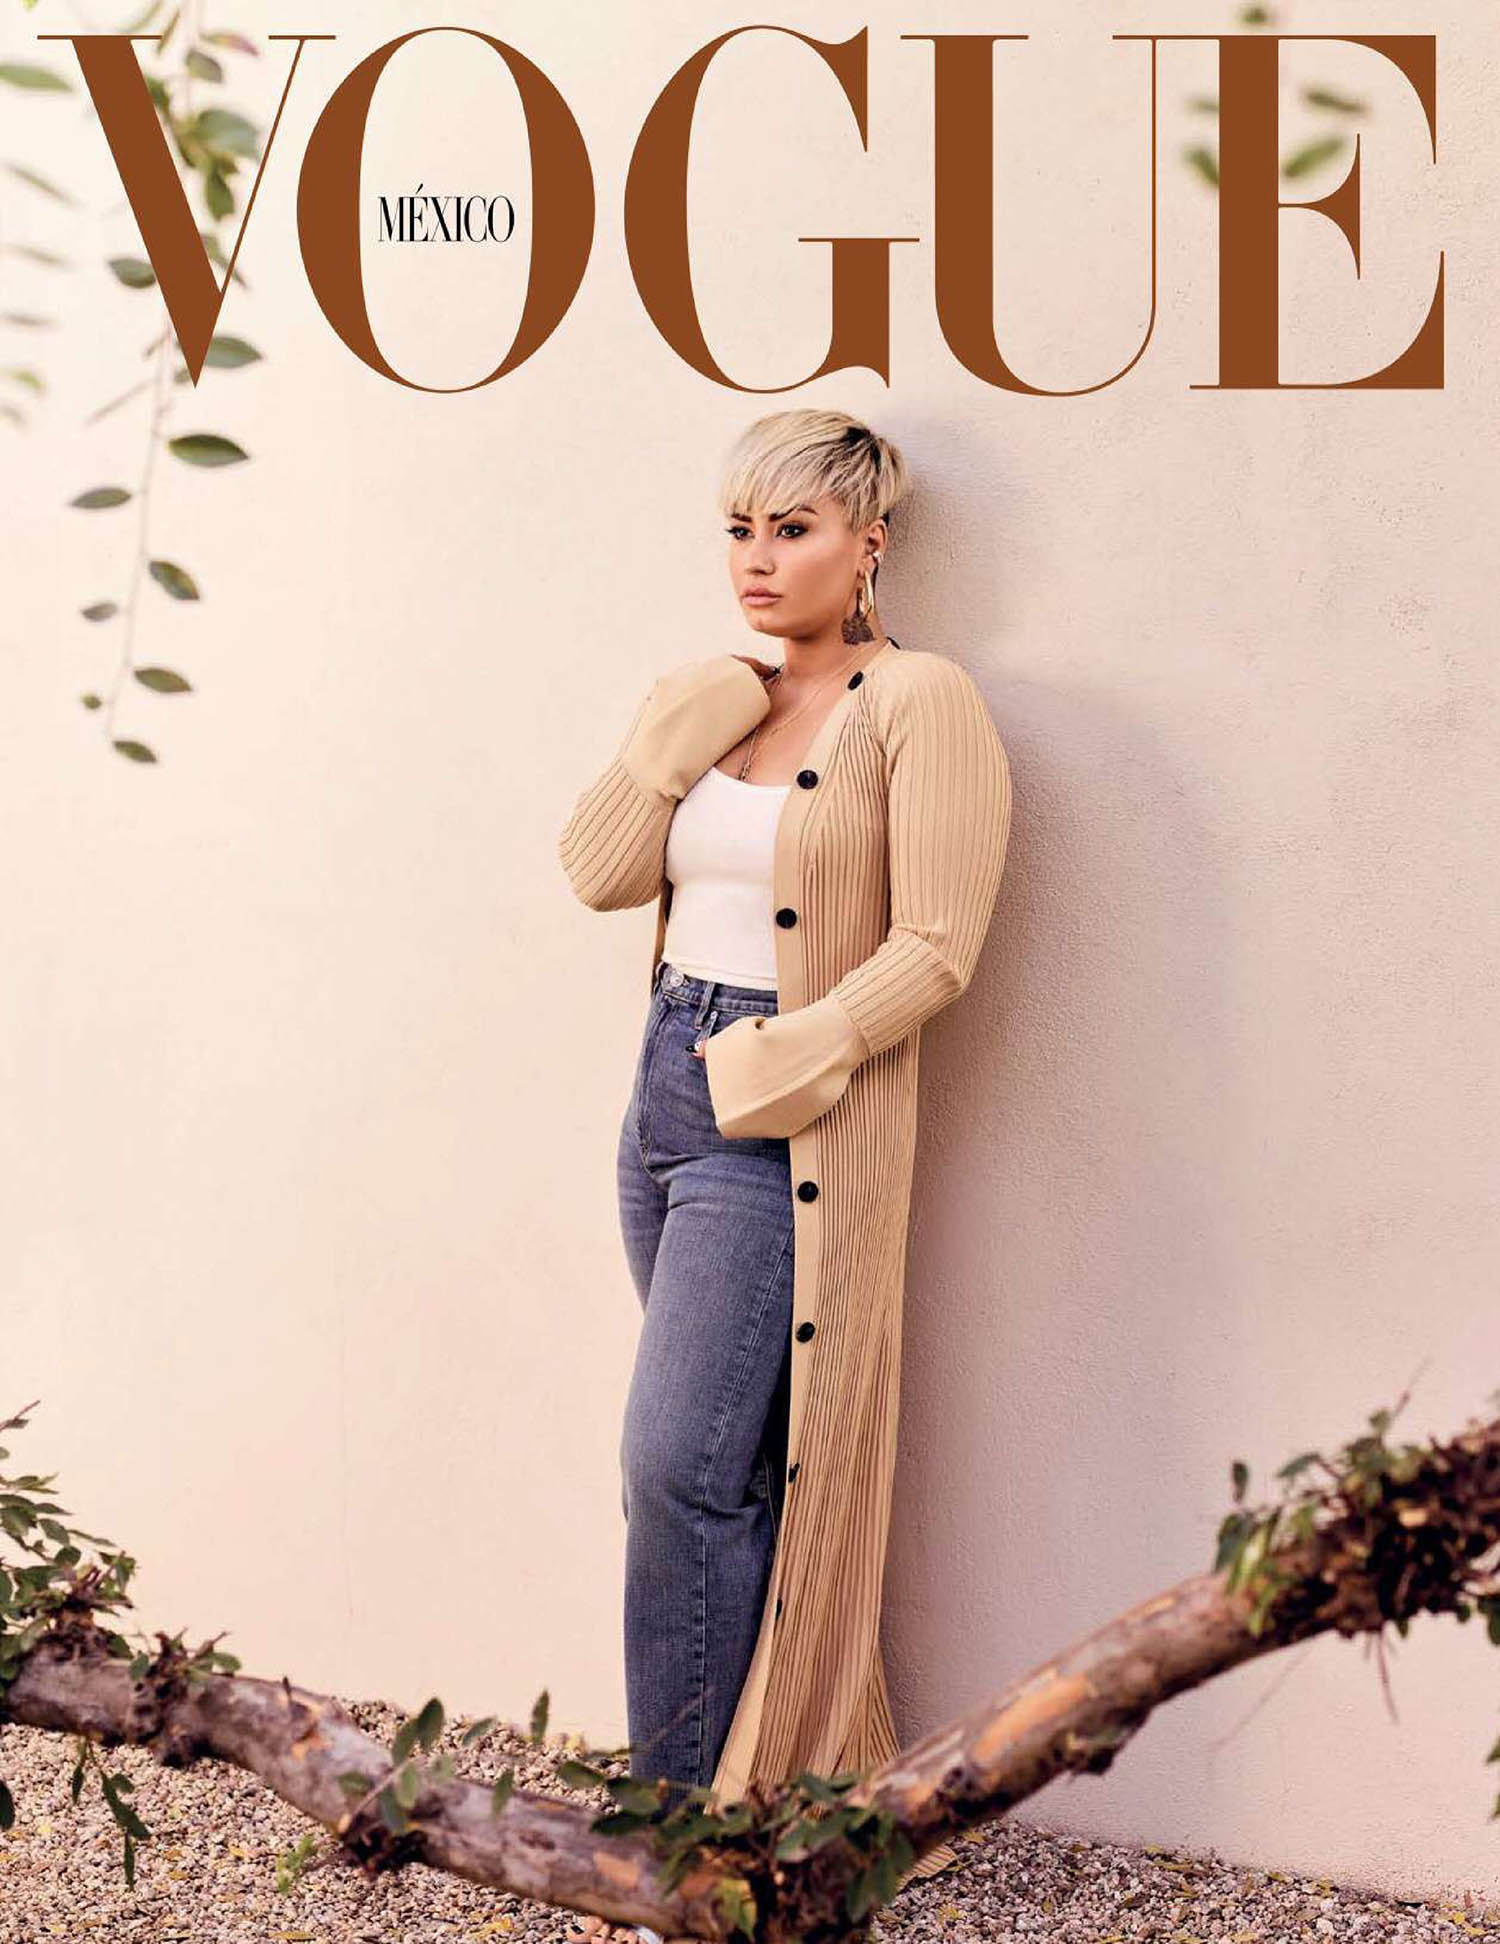 Demi Lovato covers Vogue Mexico & Latin America April 2021 by Art Streiber